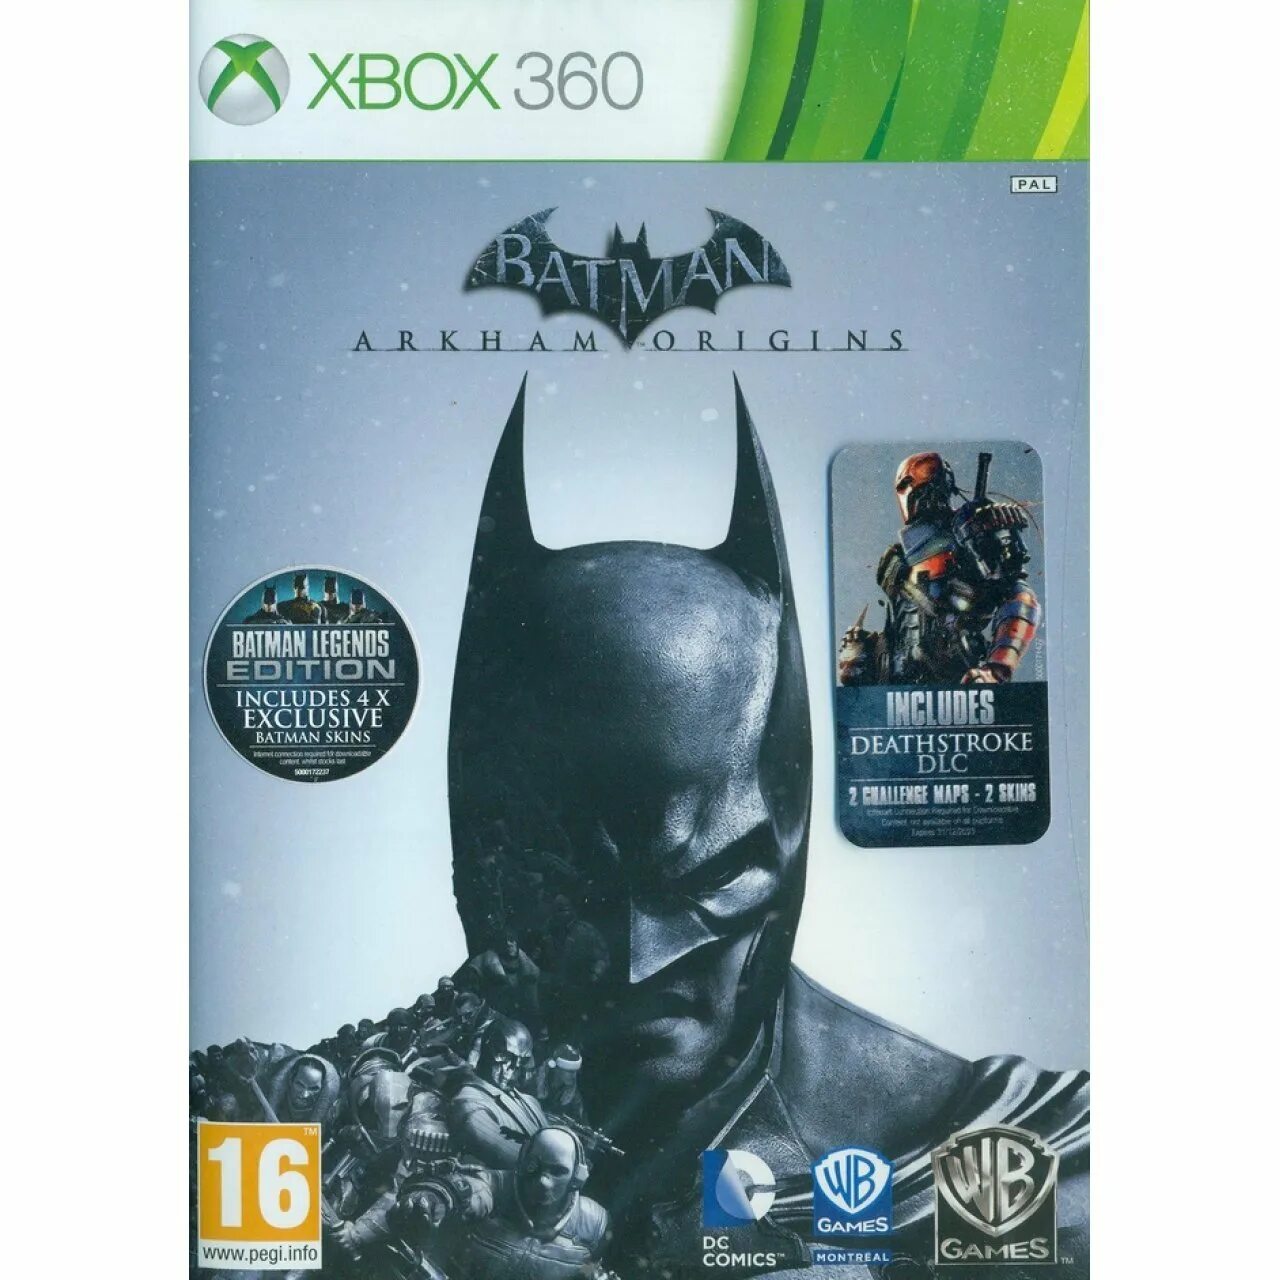 Икс бокс 360 Batman: Arkham. Бэтмен Аркхем Сити диск на Xbox 360. Бэтмен хвох 360. Batman Arkham collection Xbox 360. Xbox origin купить